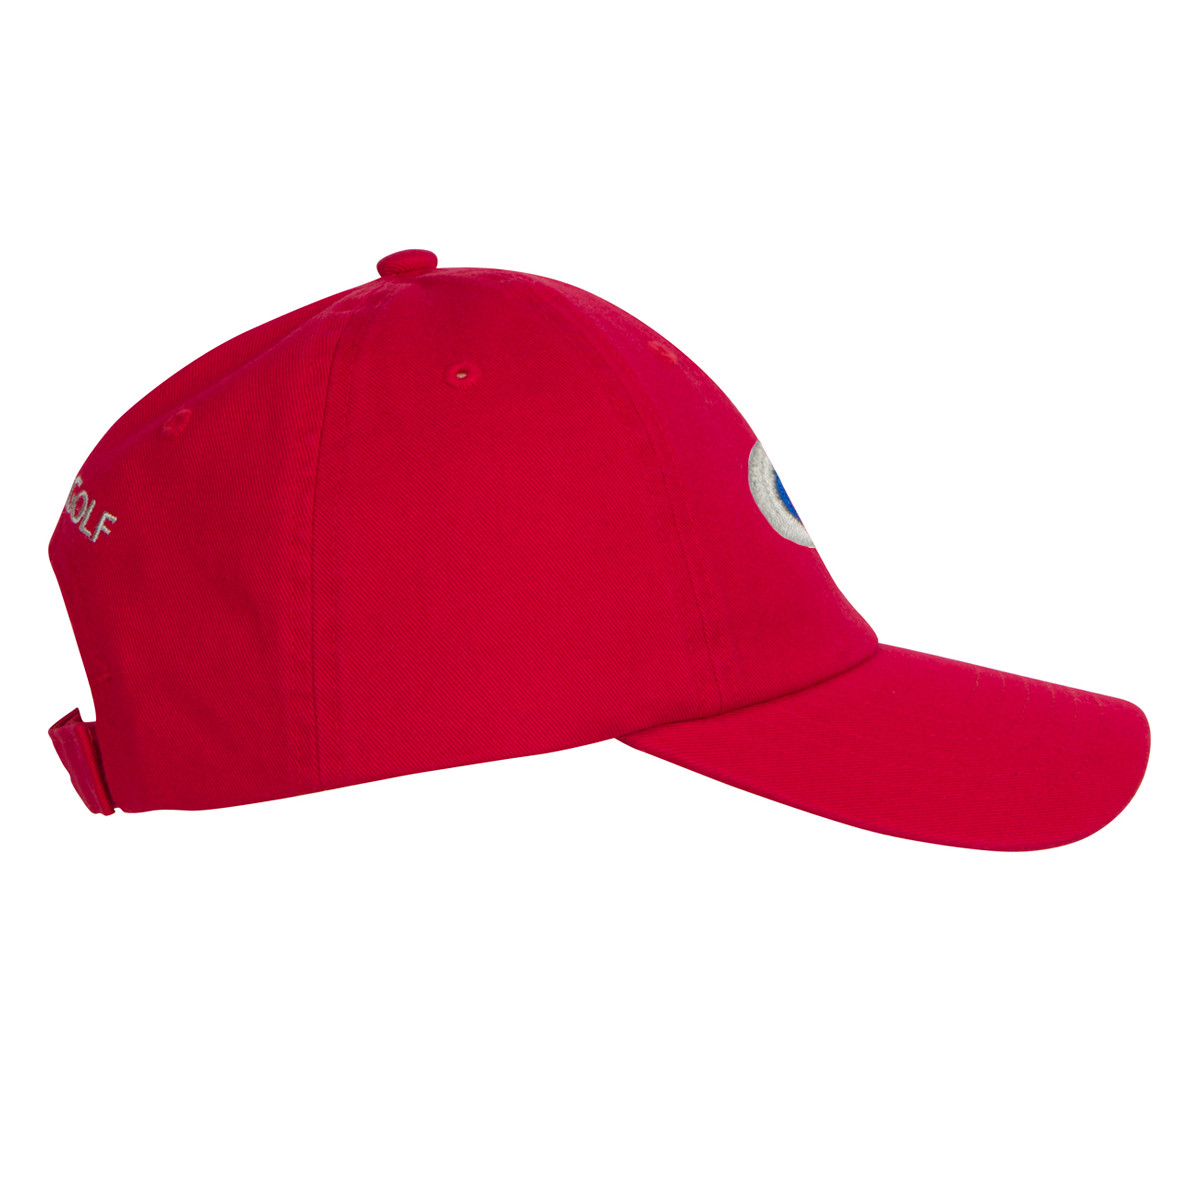 USKG Oval Logo Cap, Red - U.S. Kids Golf